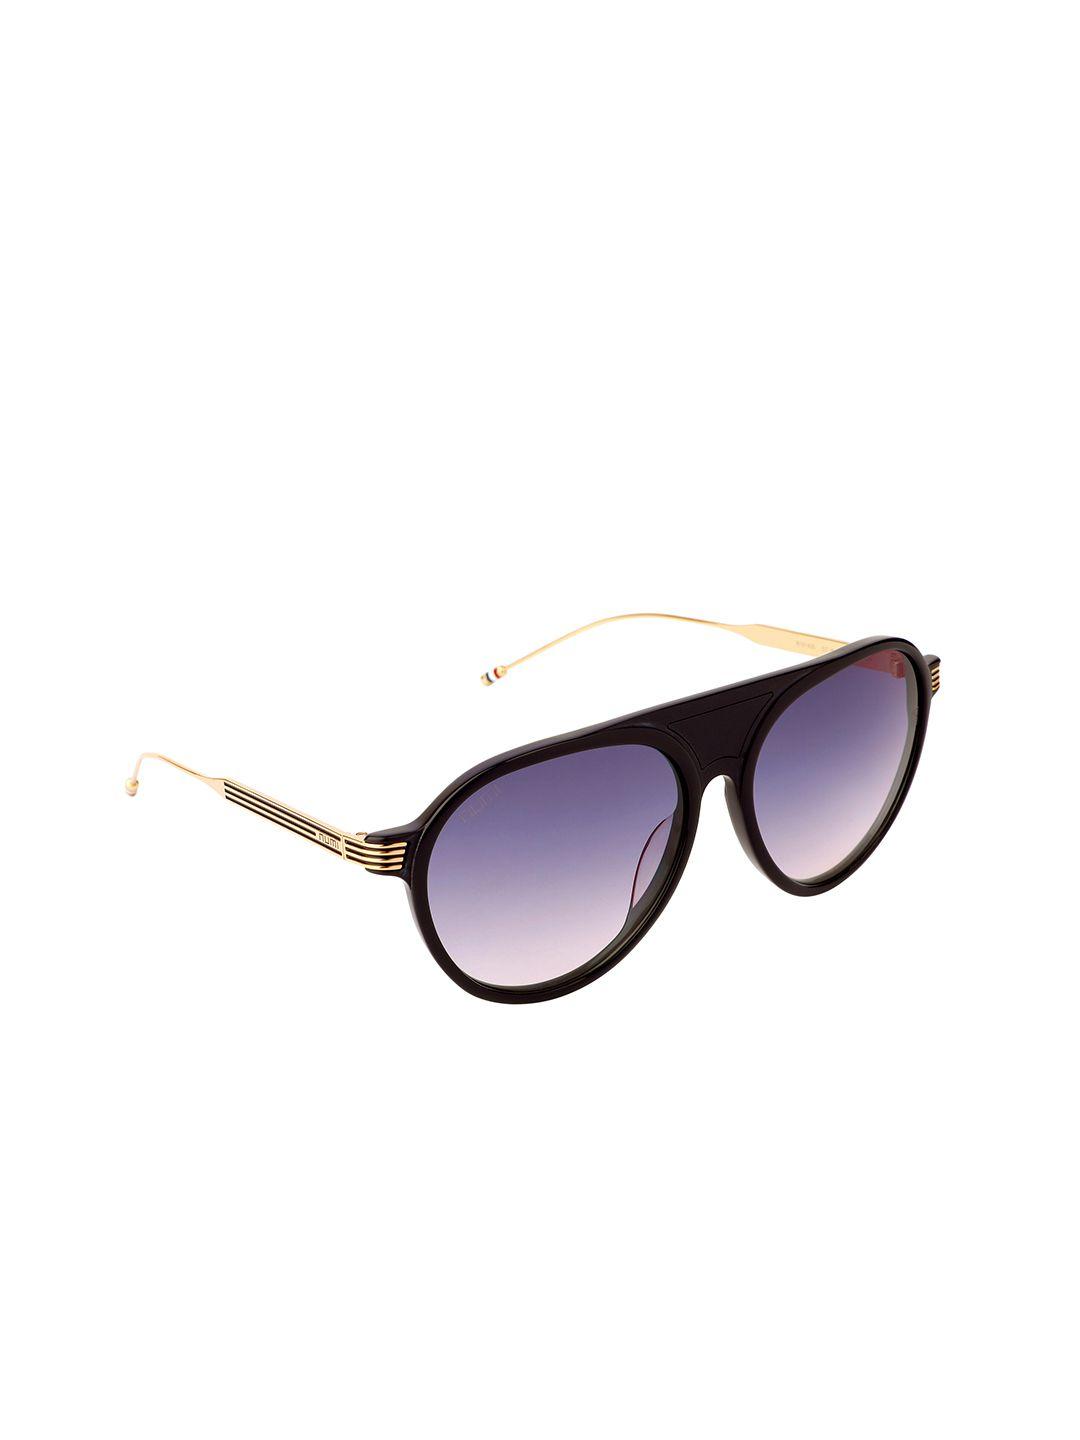 numi unisex purple lens & black aviator sunglasses with uv protected lens - n18143scl4